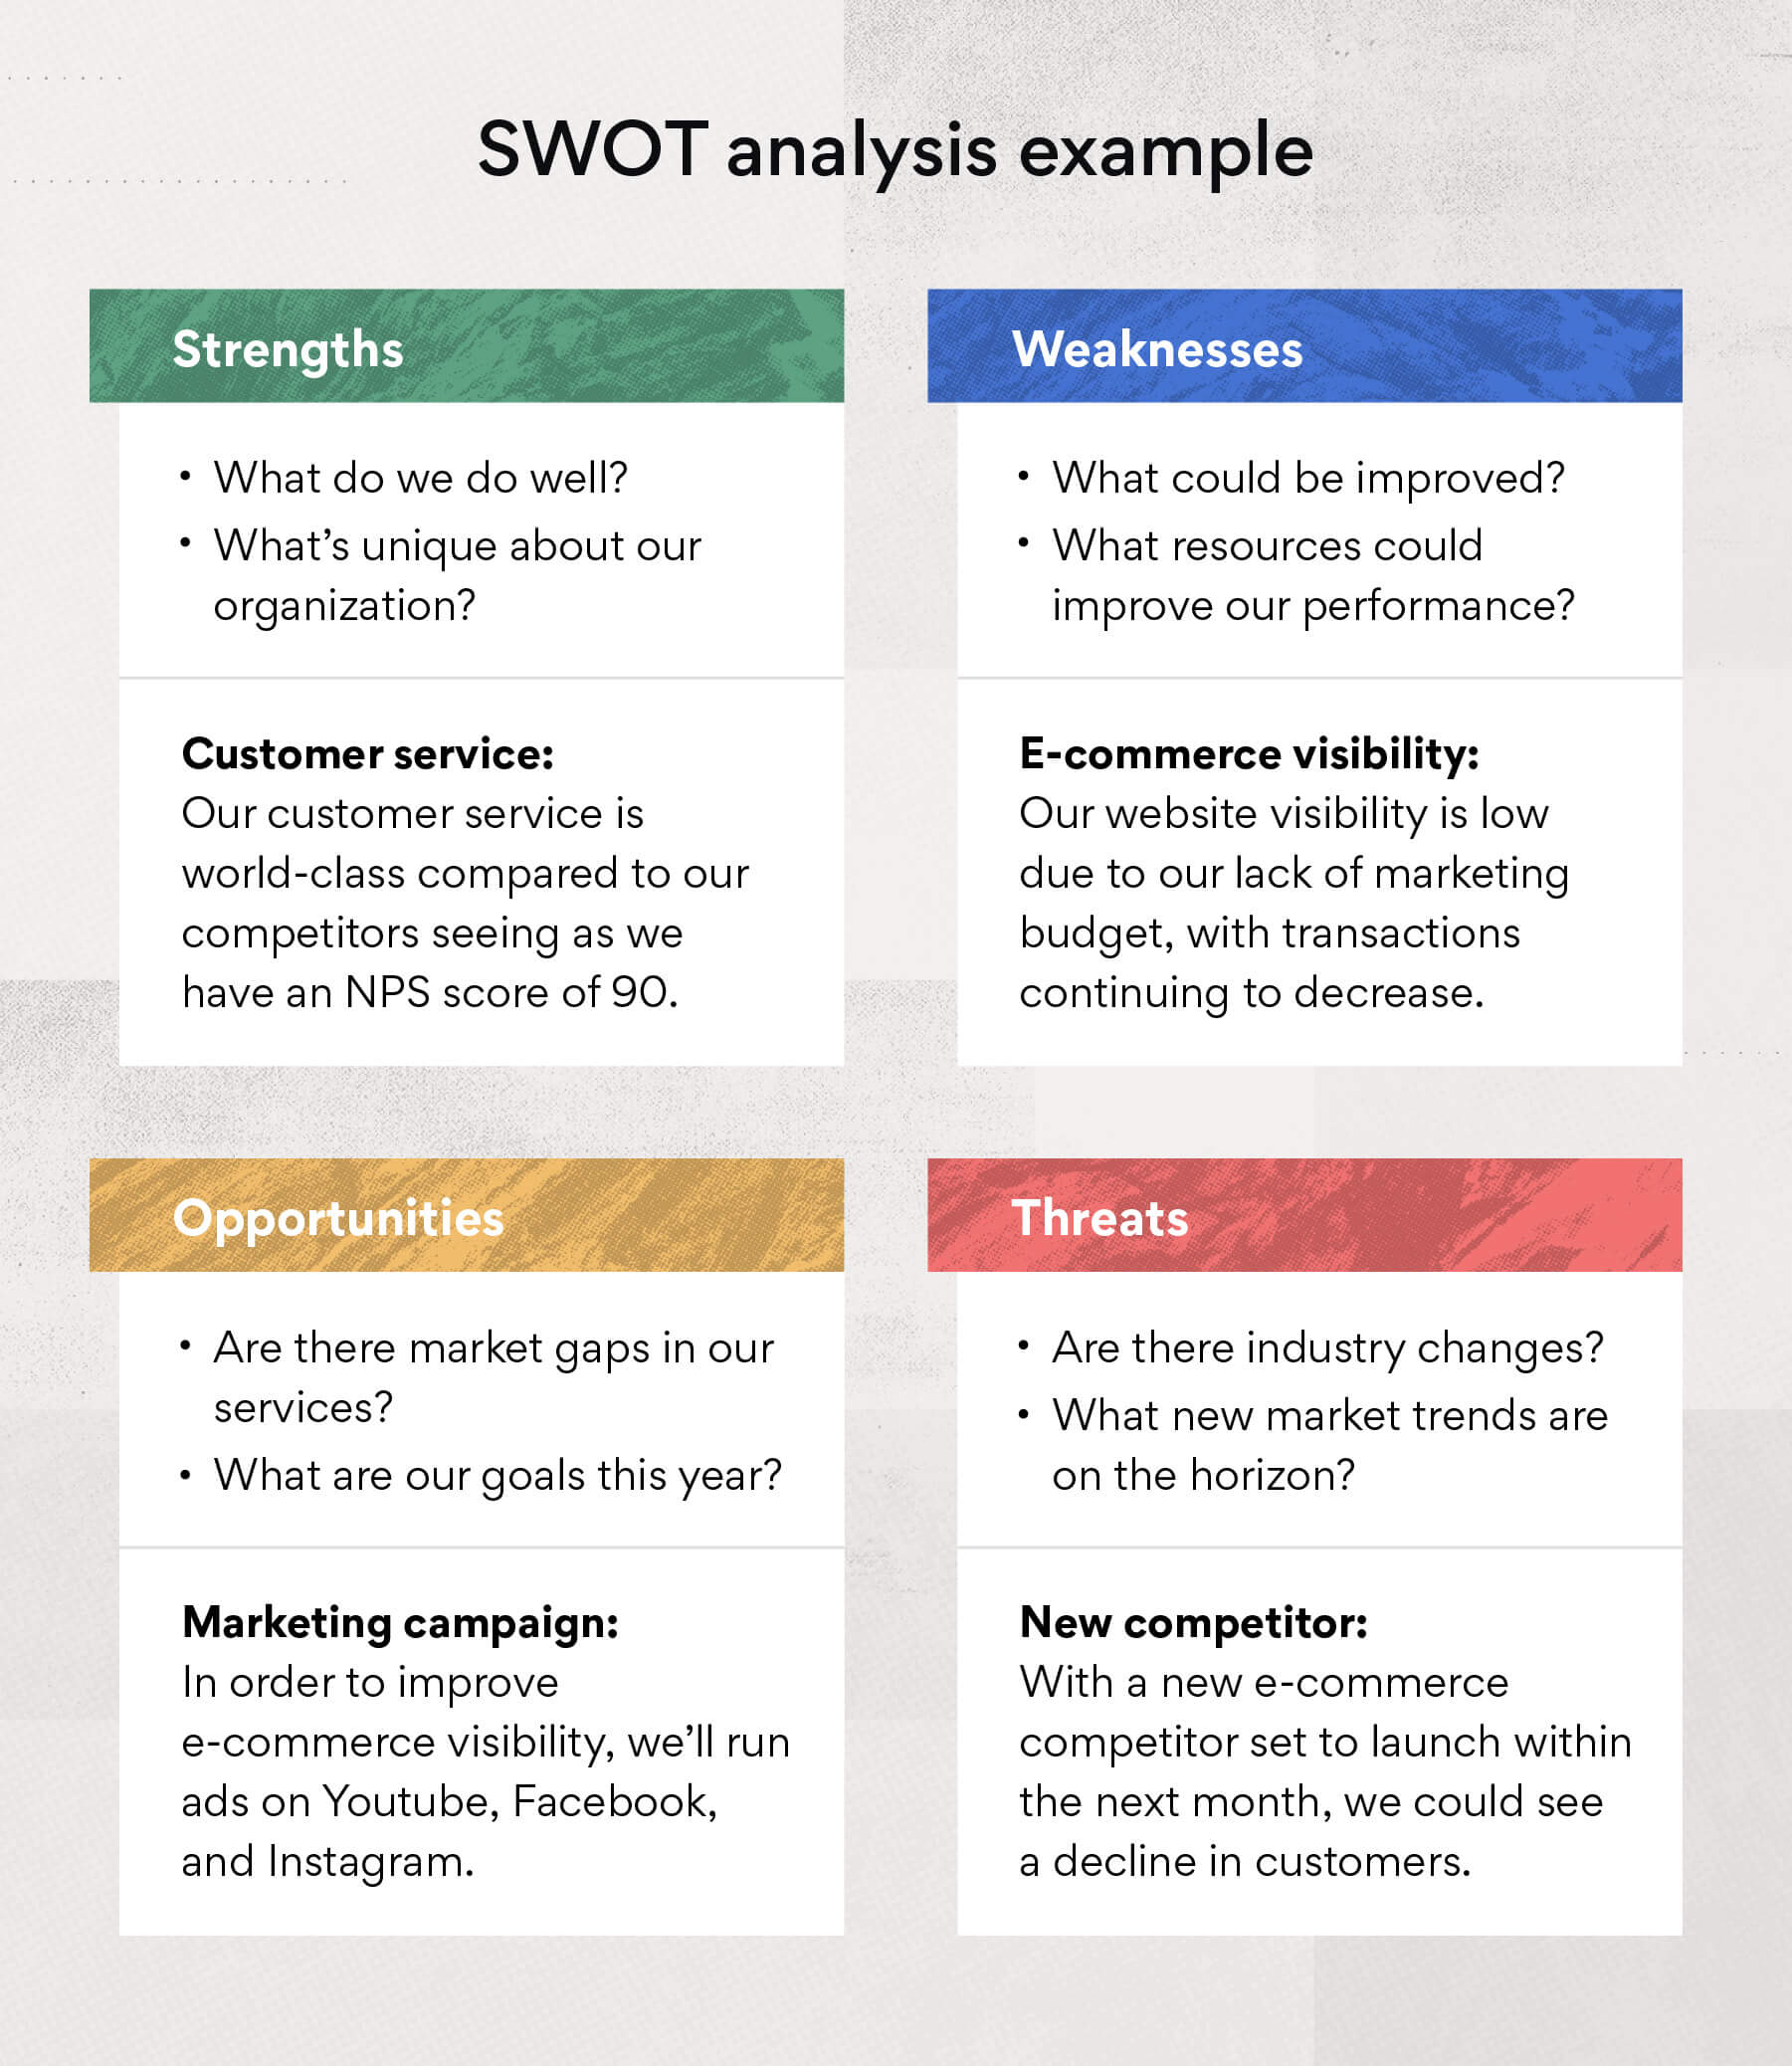 SWOT analysis example